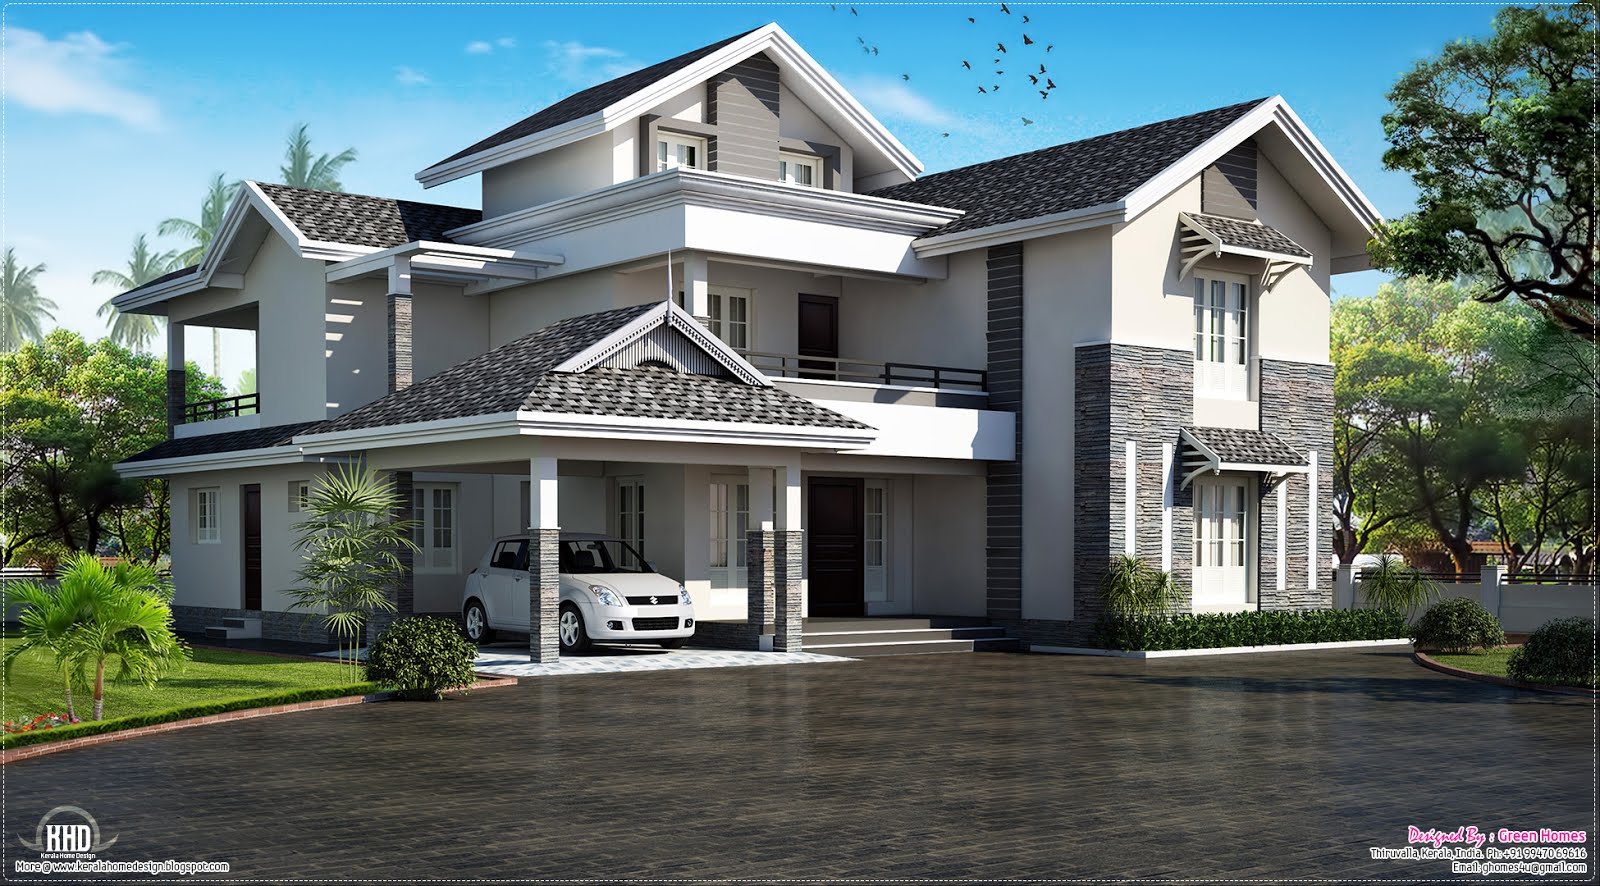  Modern  sloping roof  house  villa design  House  Design  Plans 